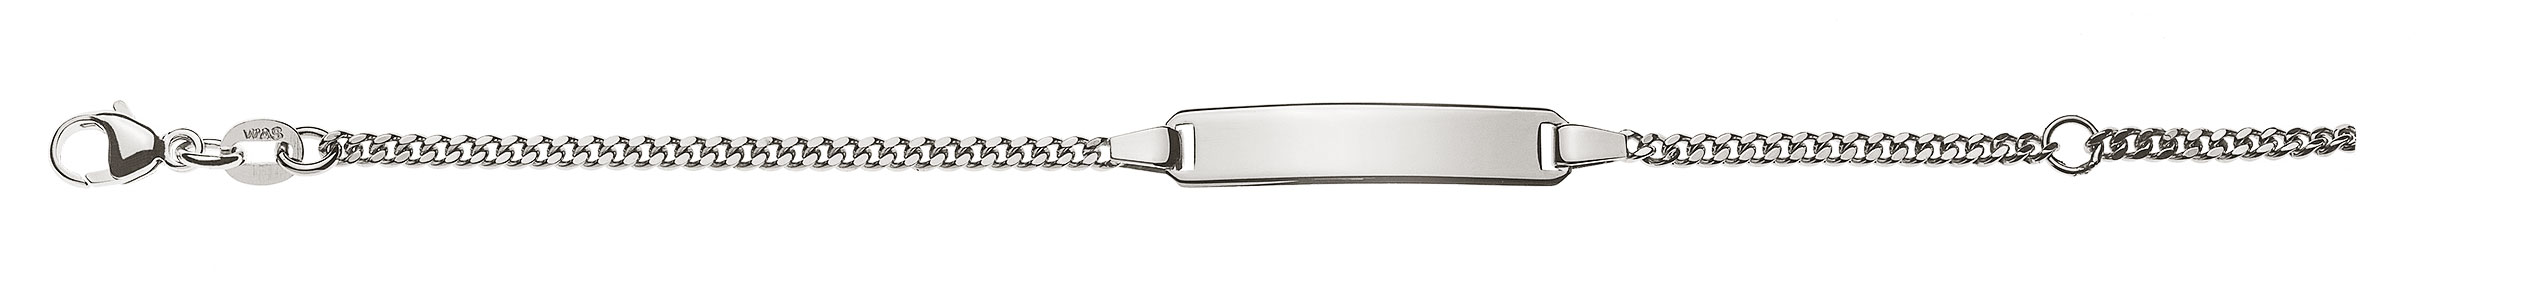 AURONOS Prestige ID-Bracelet en or blanc 18k Chaîne blindée polie 14cm